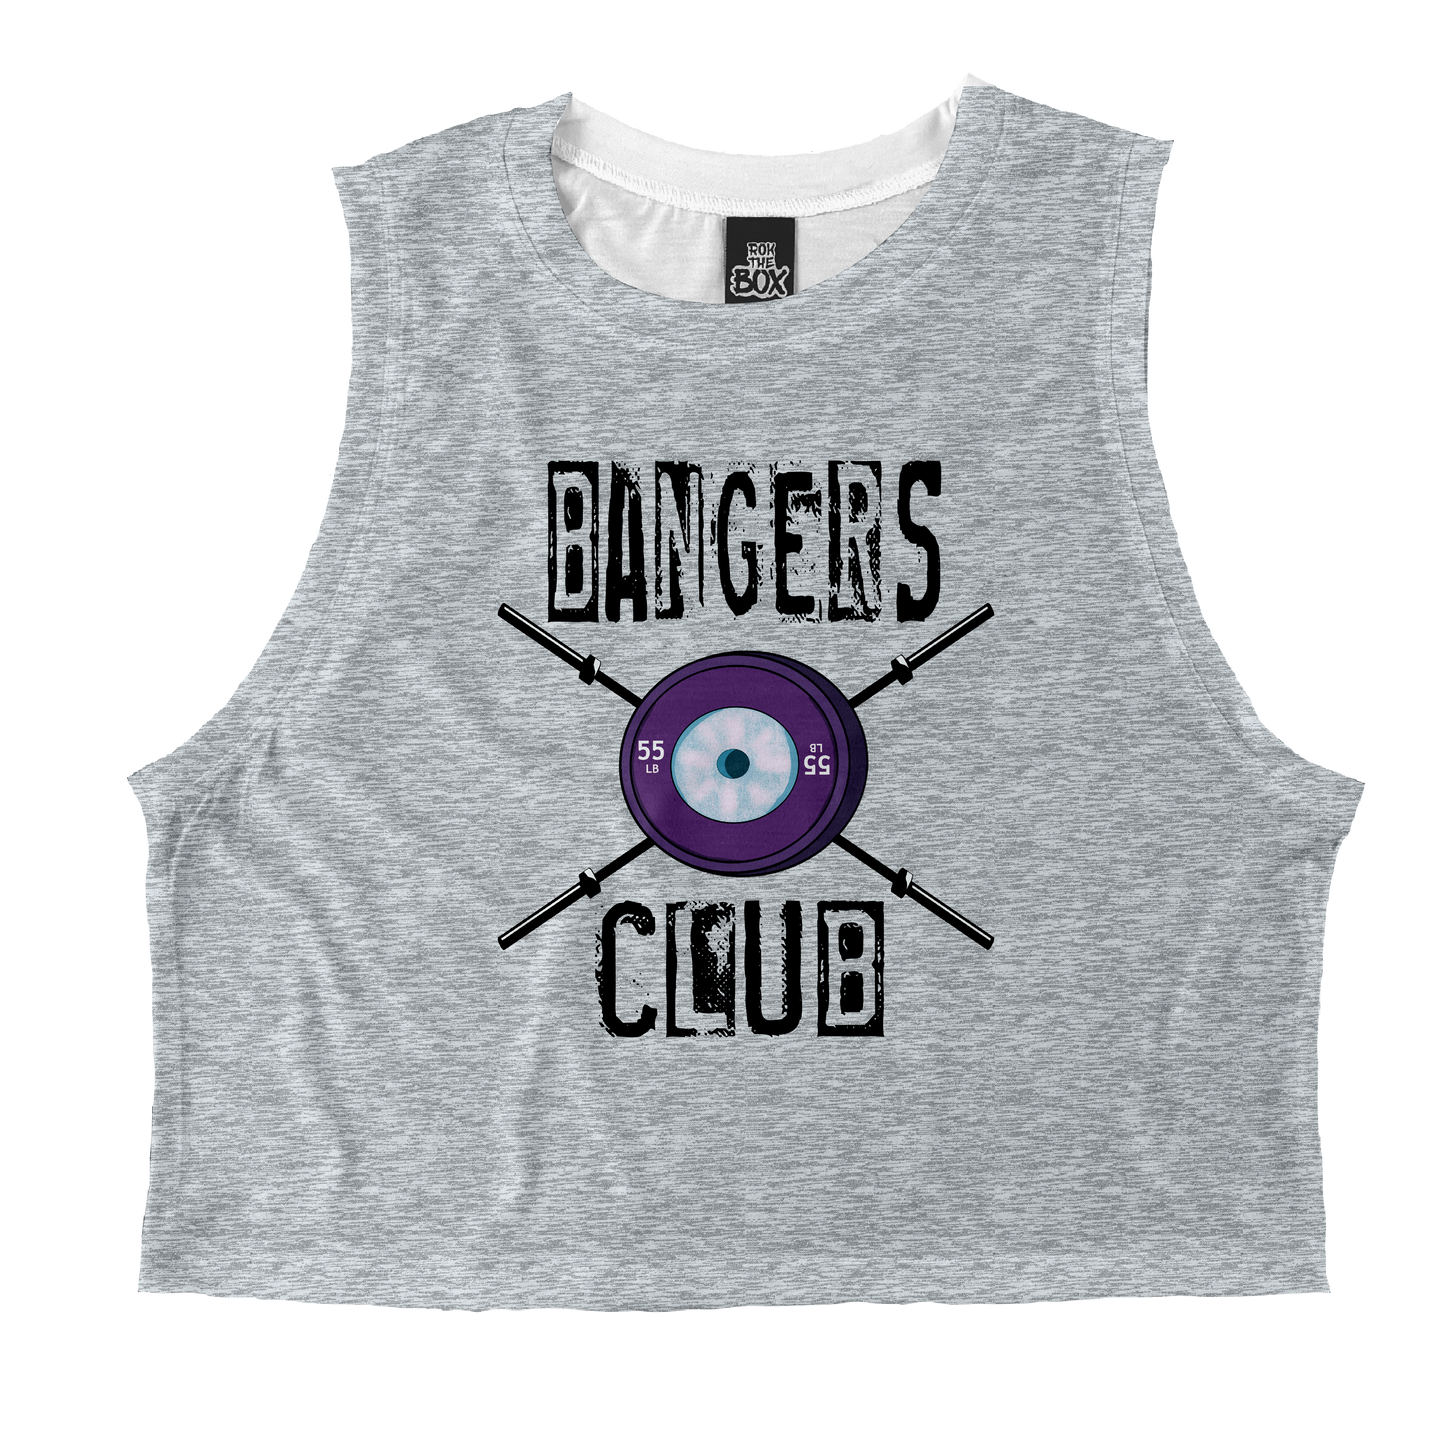 Bangers Club (gray)Tops